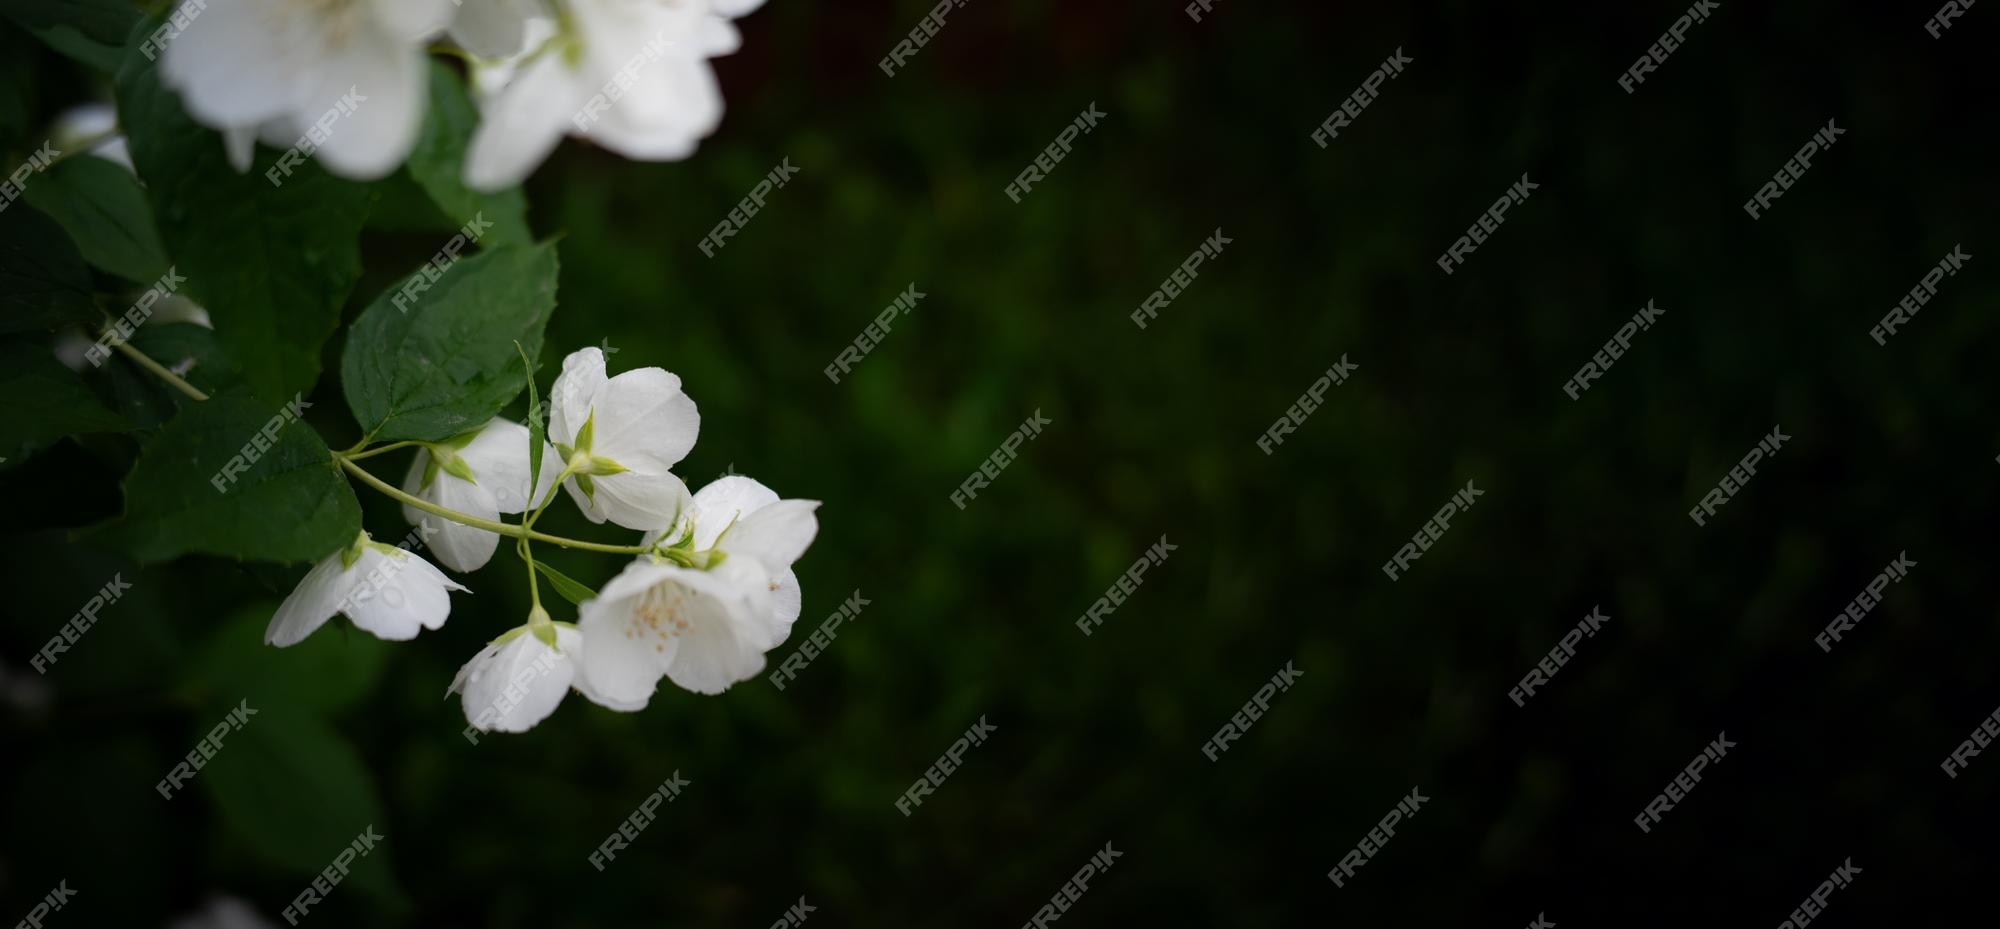 Premium Photo | Defocused abstract background of jasmine aesthetic flower